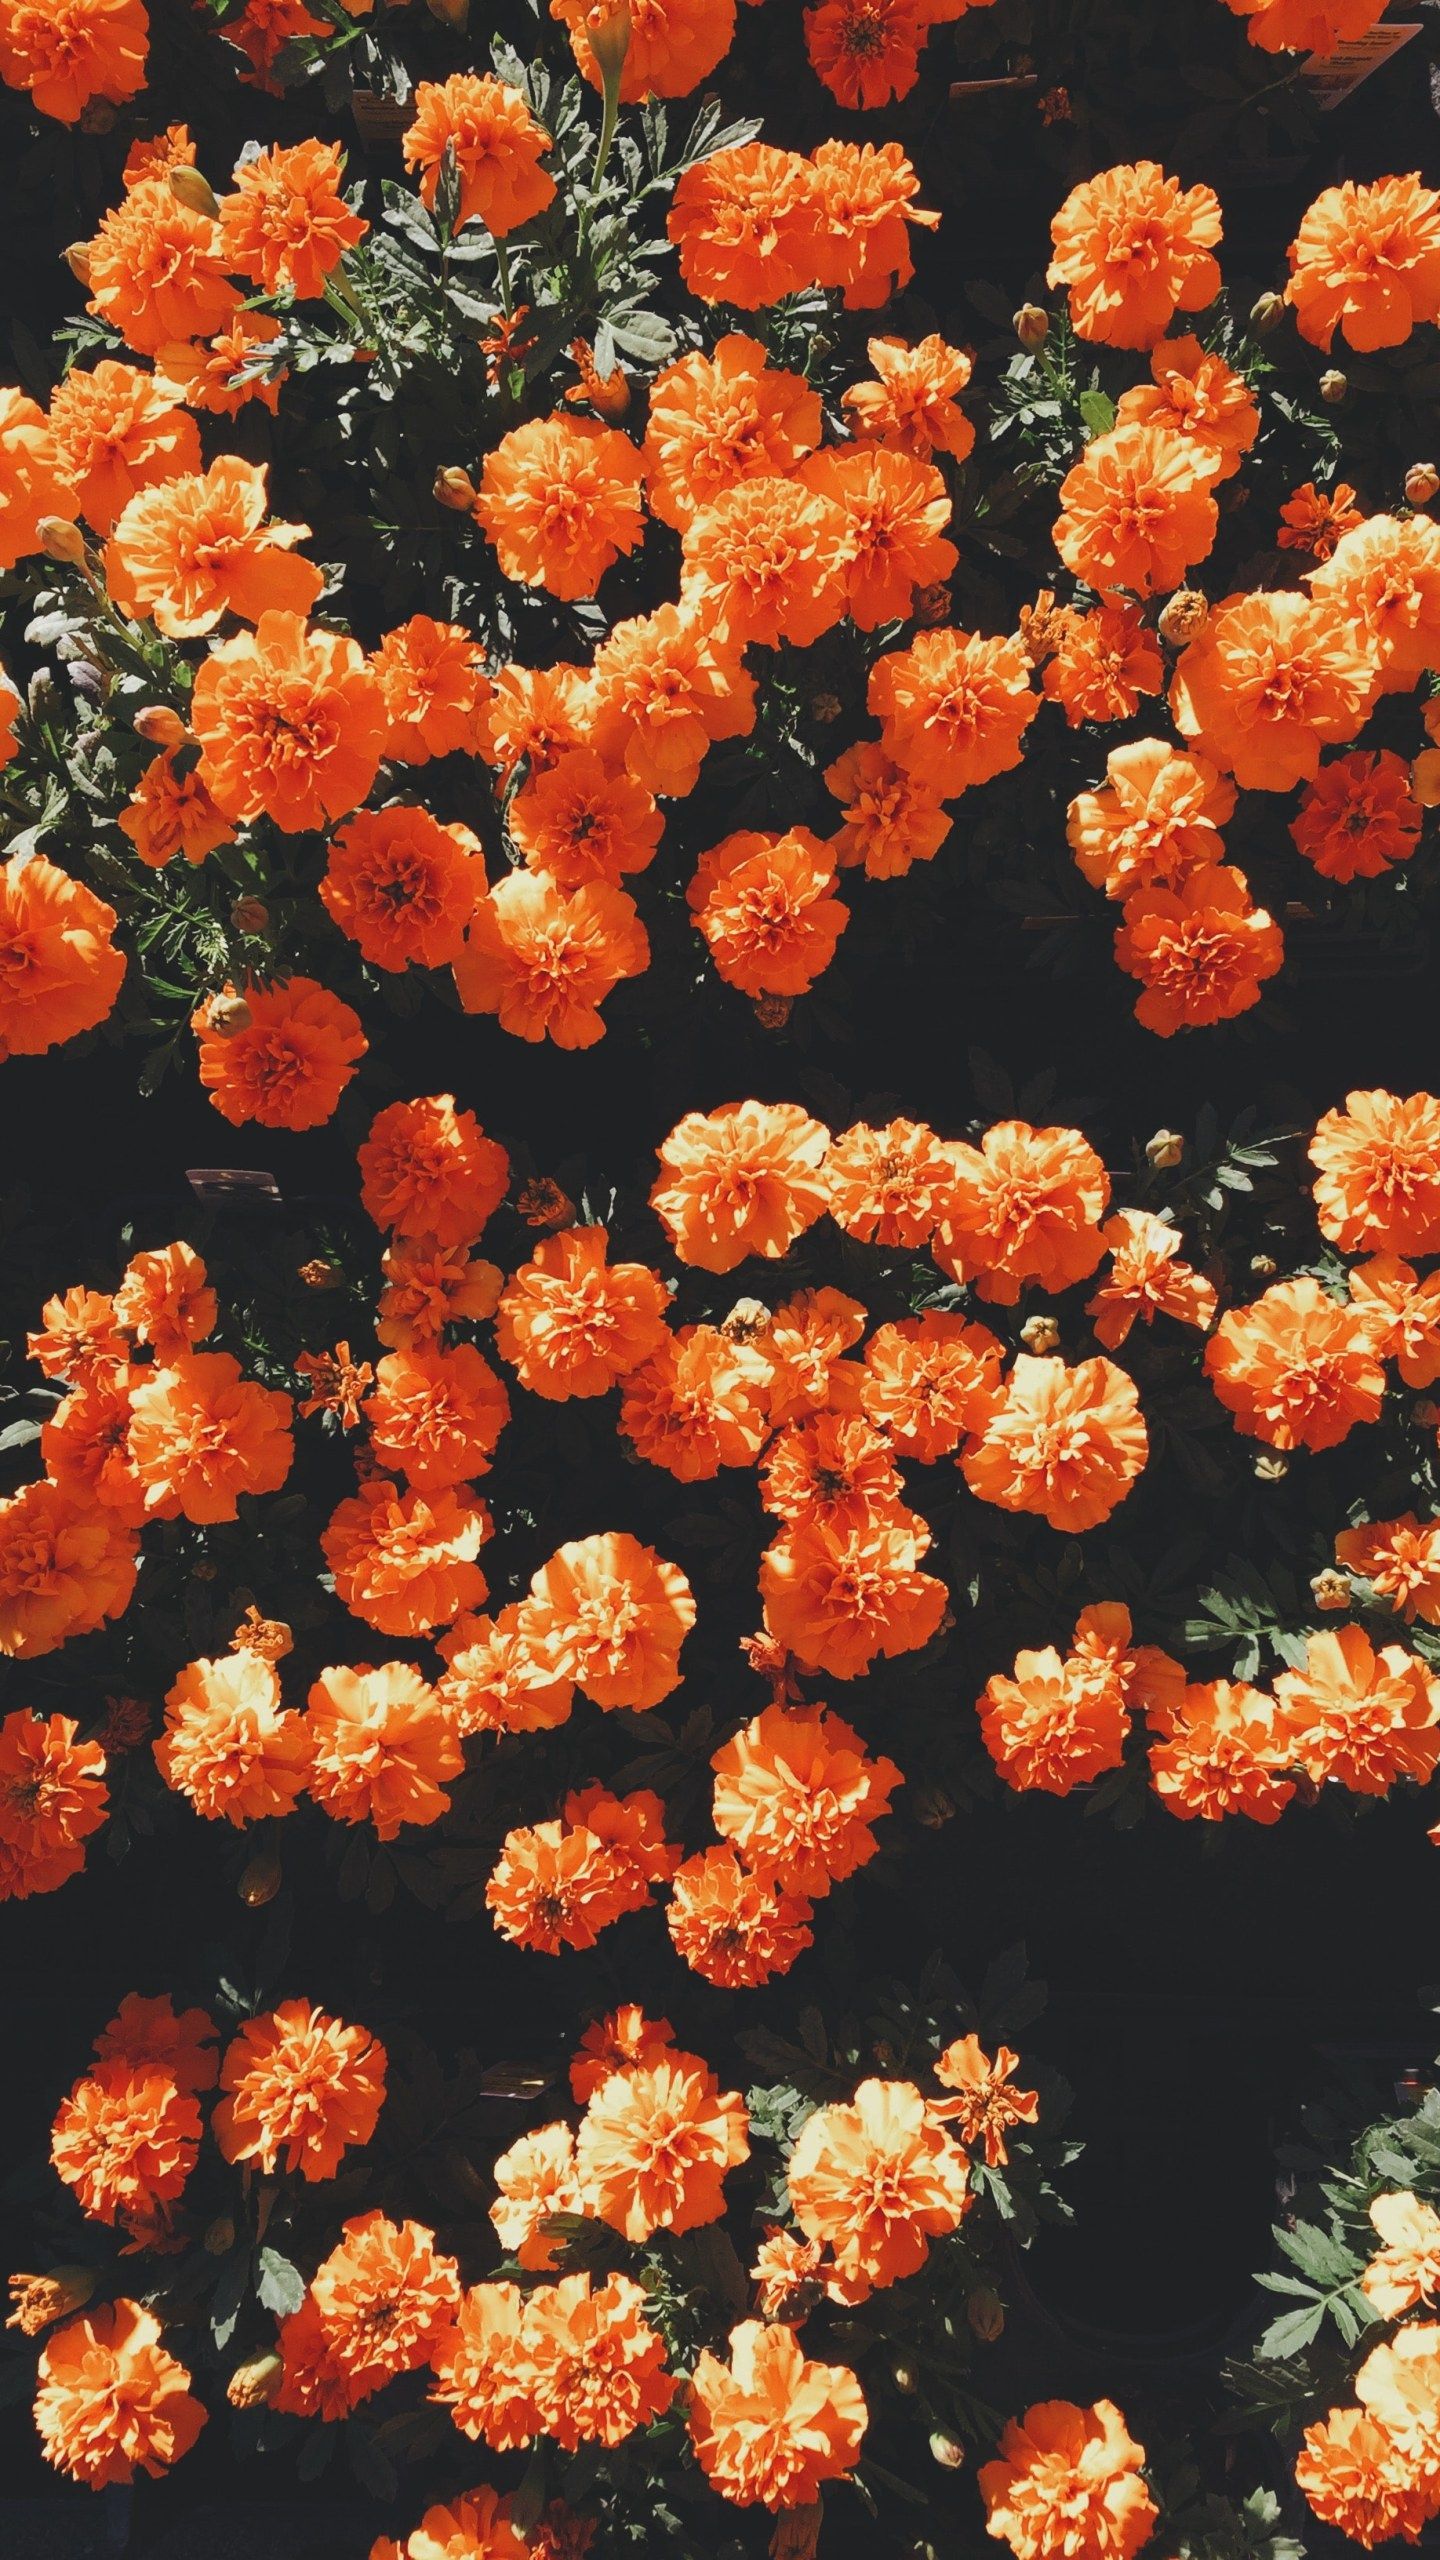 A close up of some orange flowers - Orange